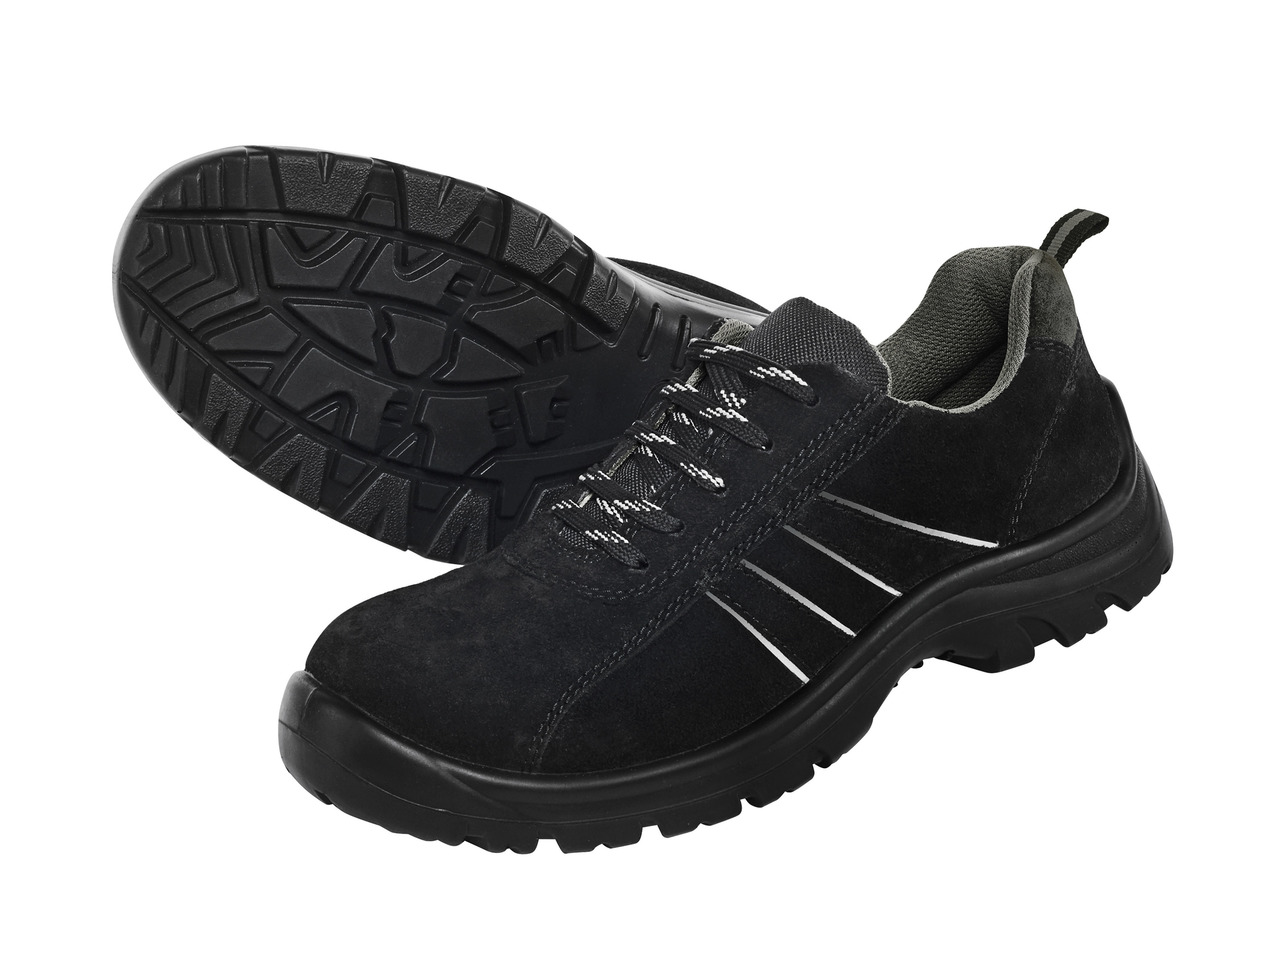 Powerfix Profi Leather Safety Shoes1